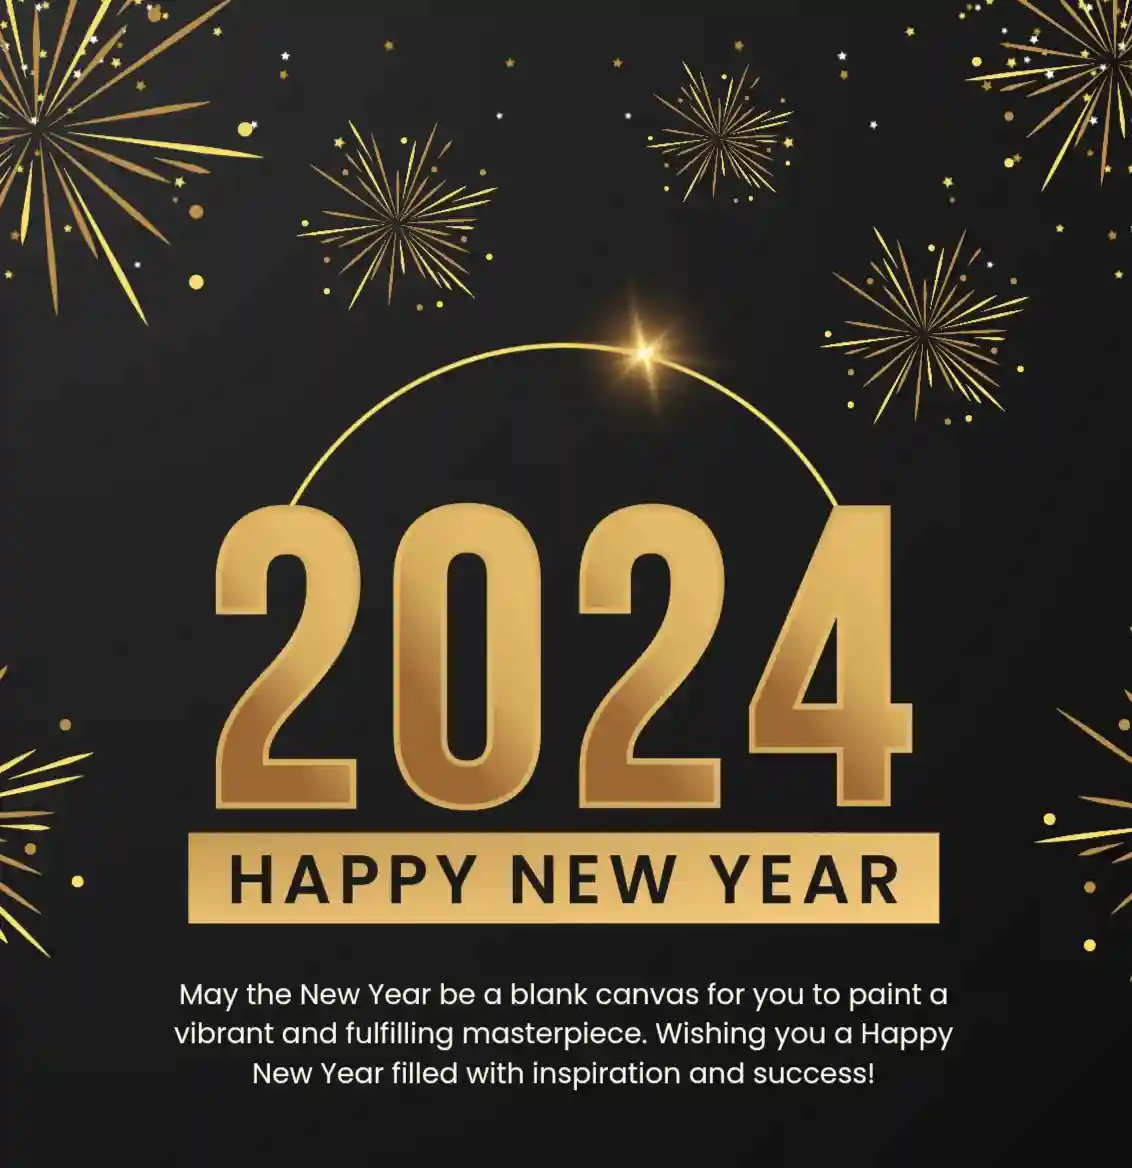 Happy New Year 2024 Wishes, SMS, Greetings, Images In Punjabi - ਨਵੇਂ ਸਾਲ ਦੀਆਂ ਸ਼ੁਭਕਾਮਨਾਵਾਂ, ਸੰਦੇਸ਼